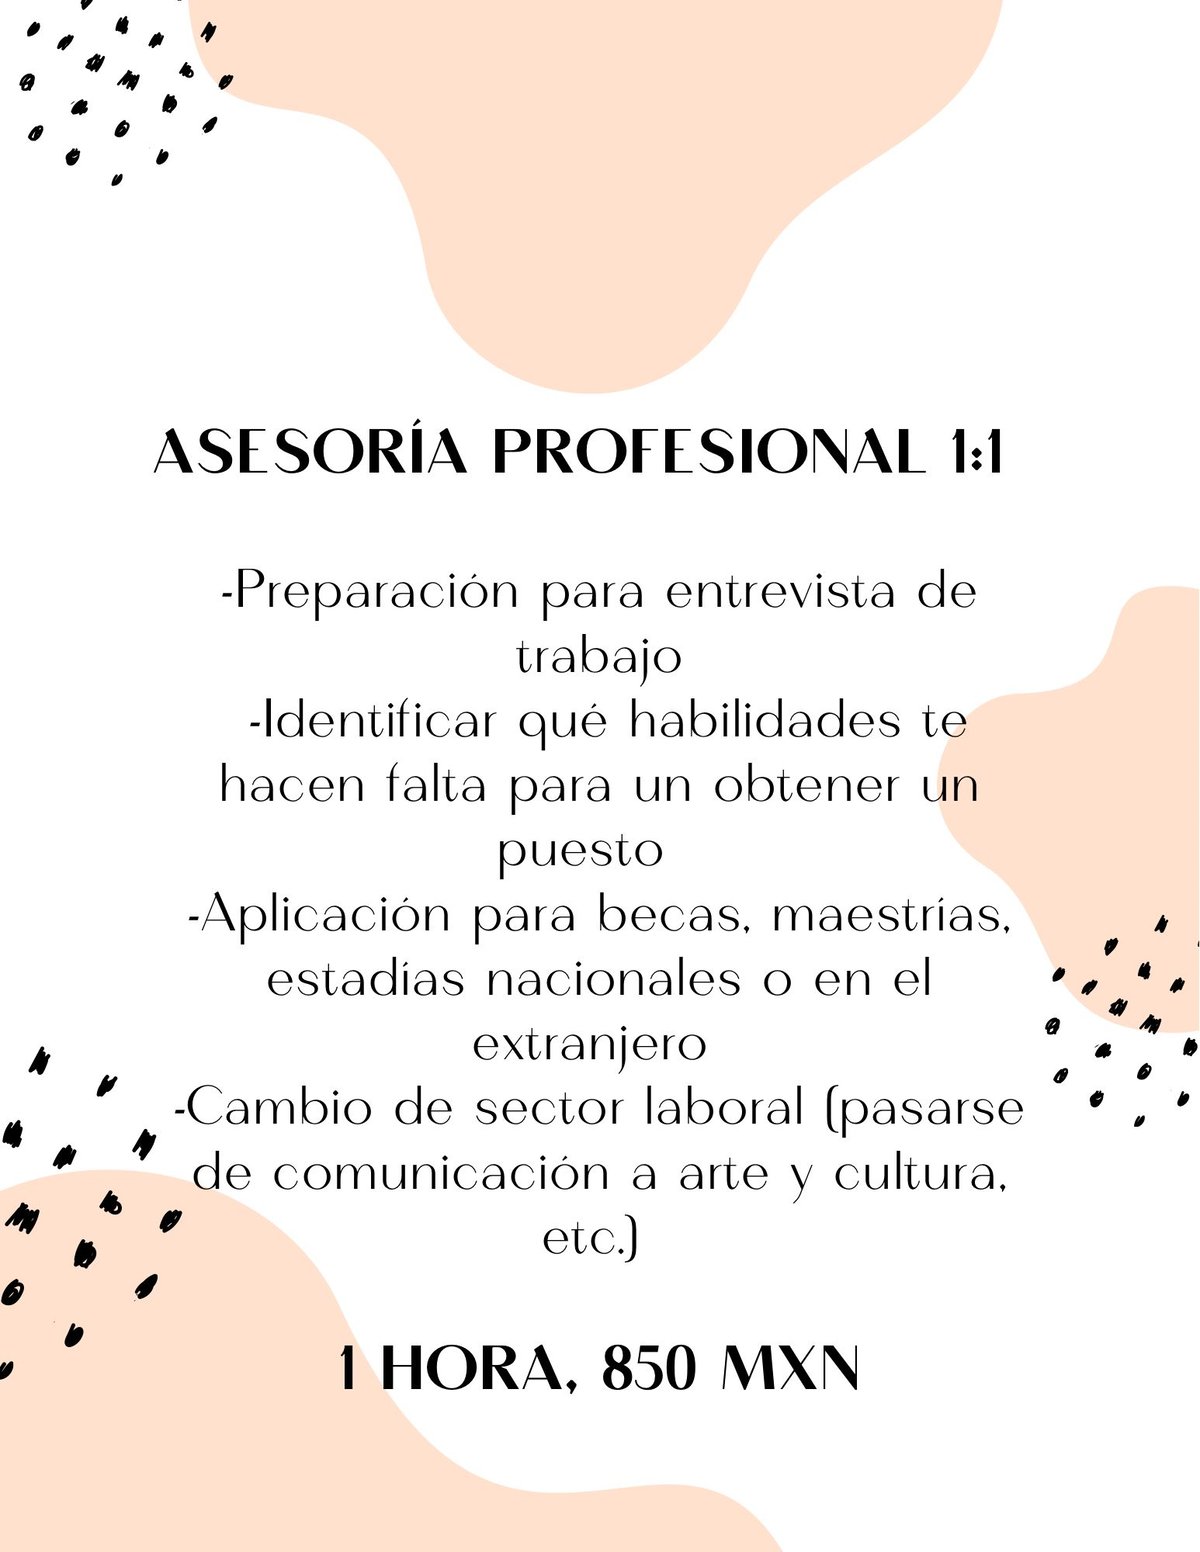 Image of Asesorías profesionales 1:1